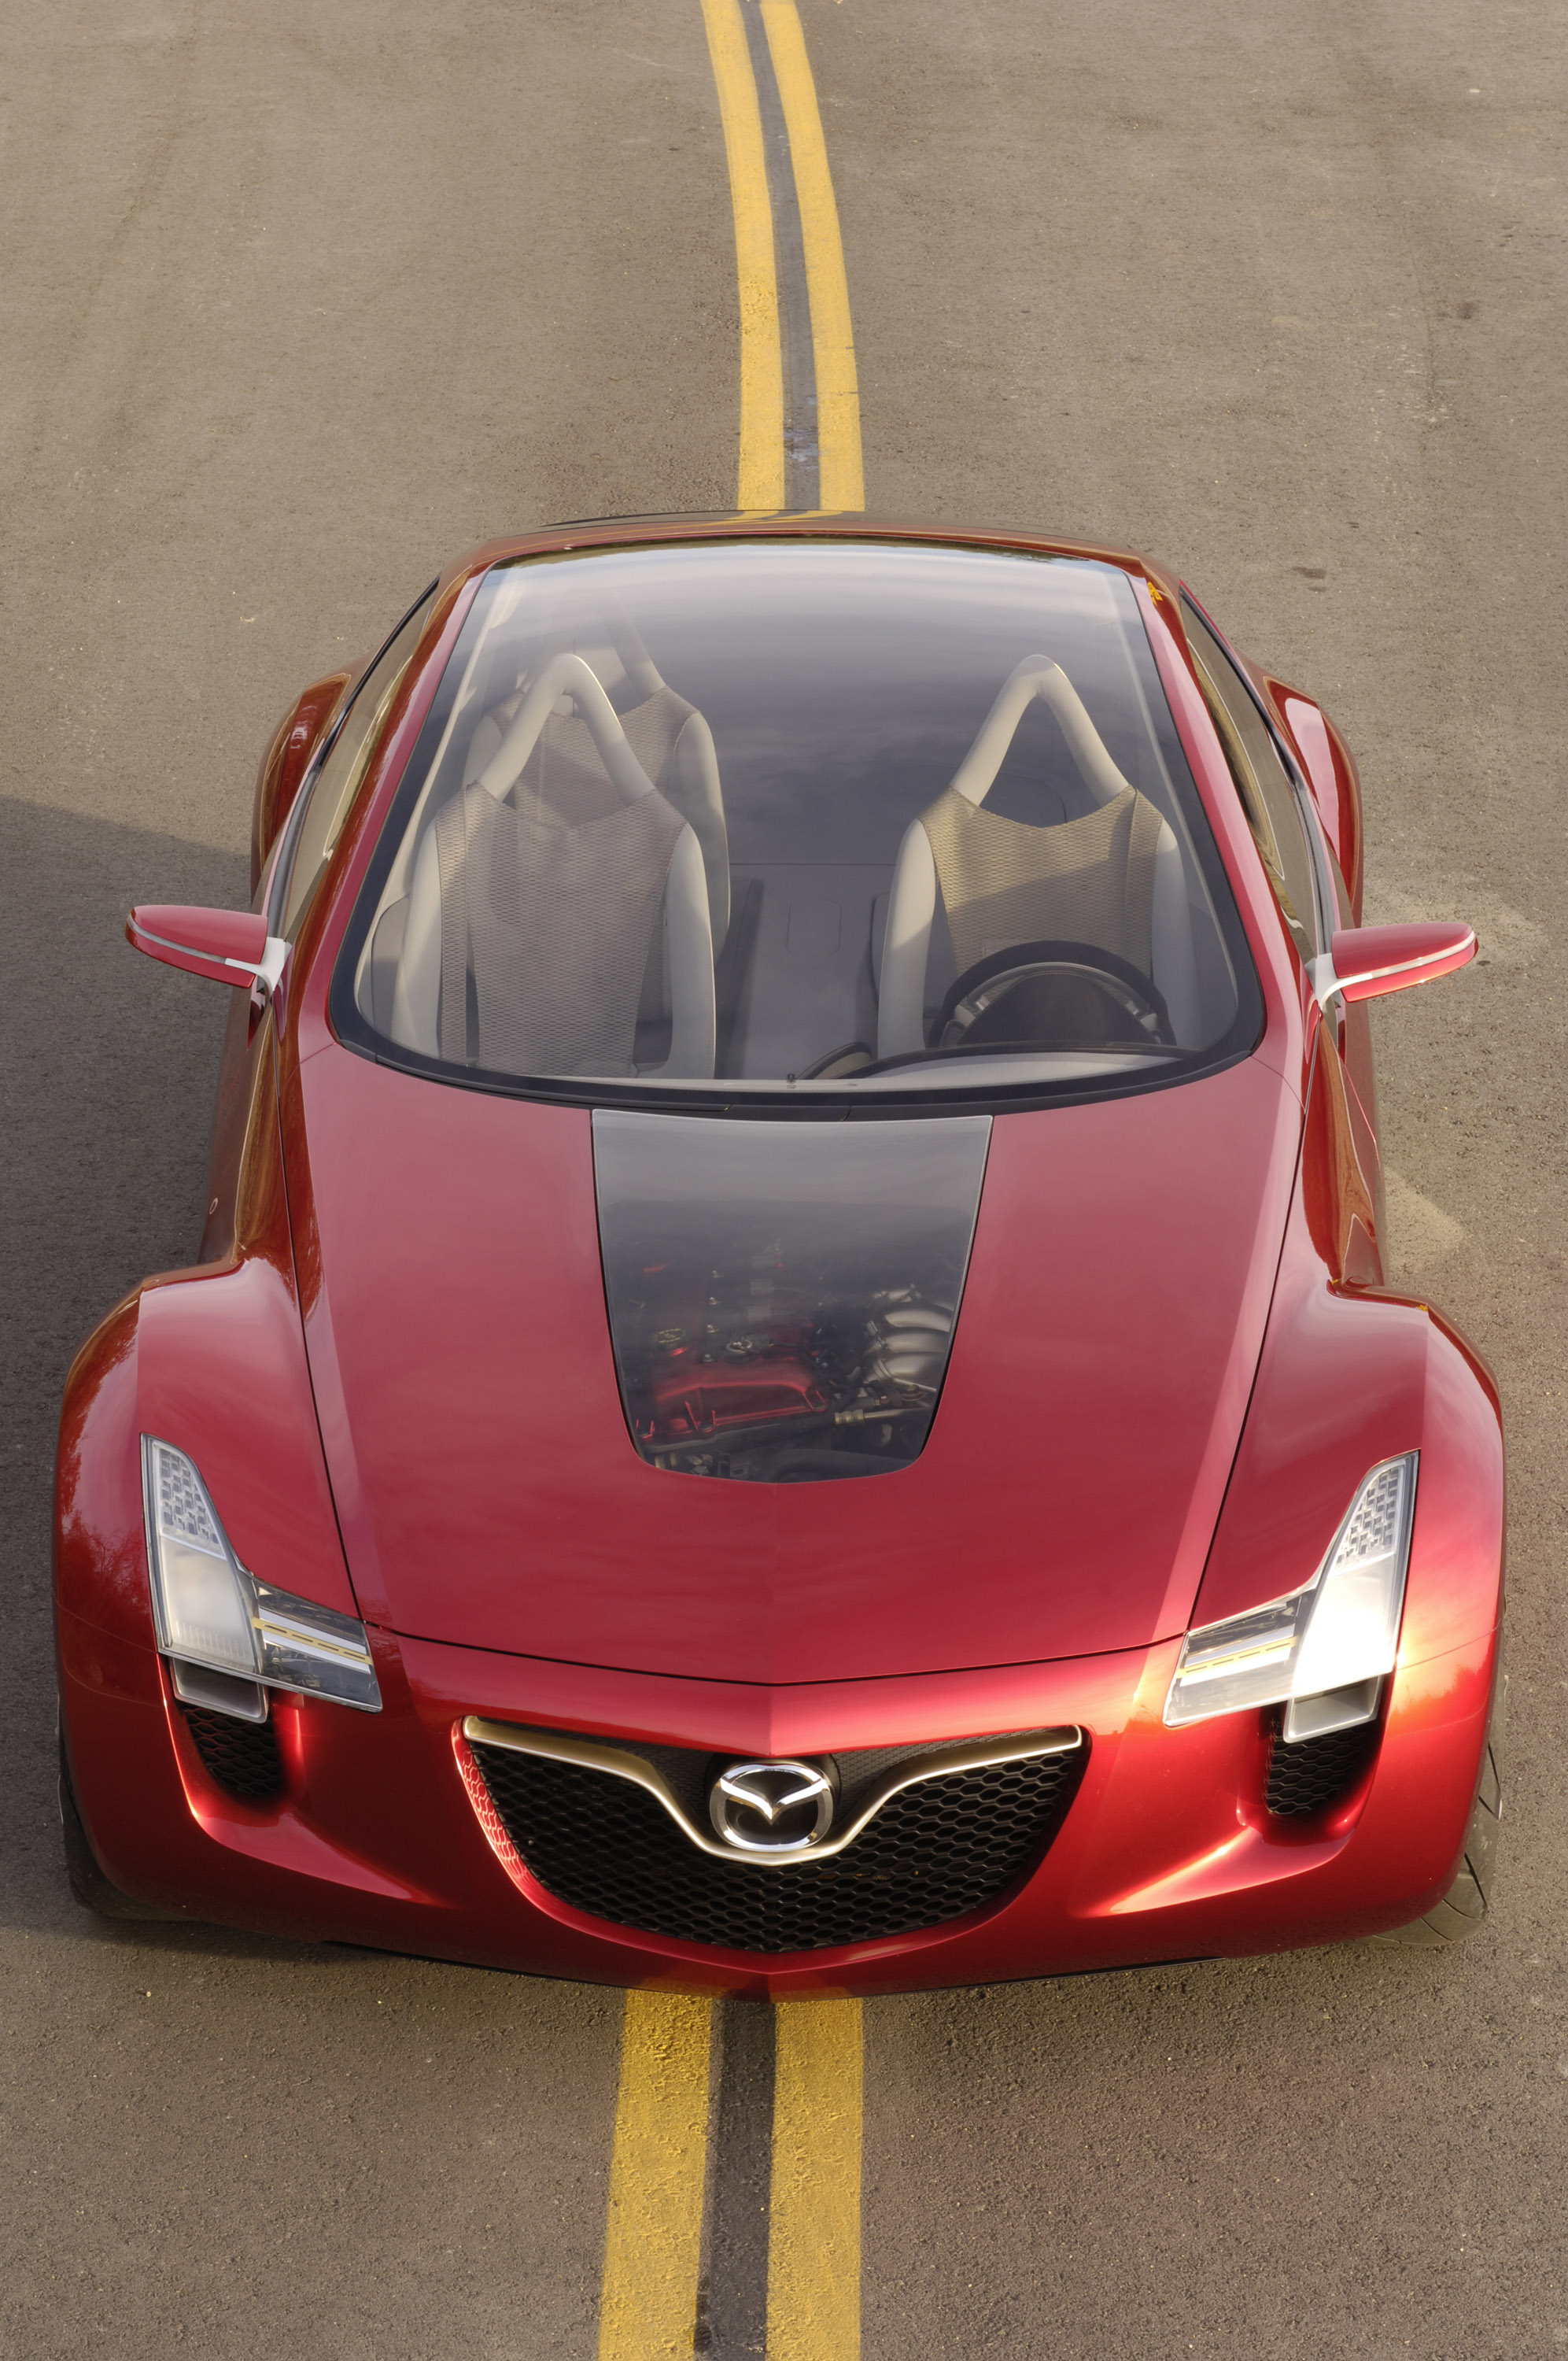 Mazda KABURA Concept | Flickr - Photo Sharing!